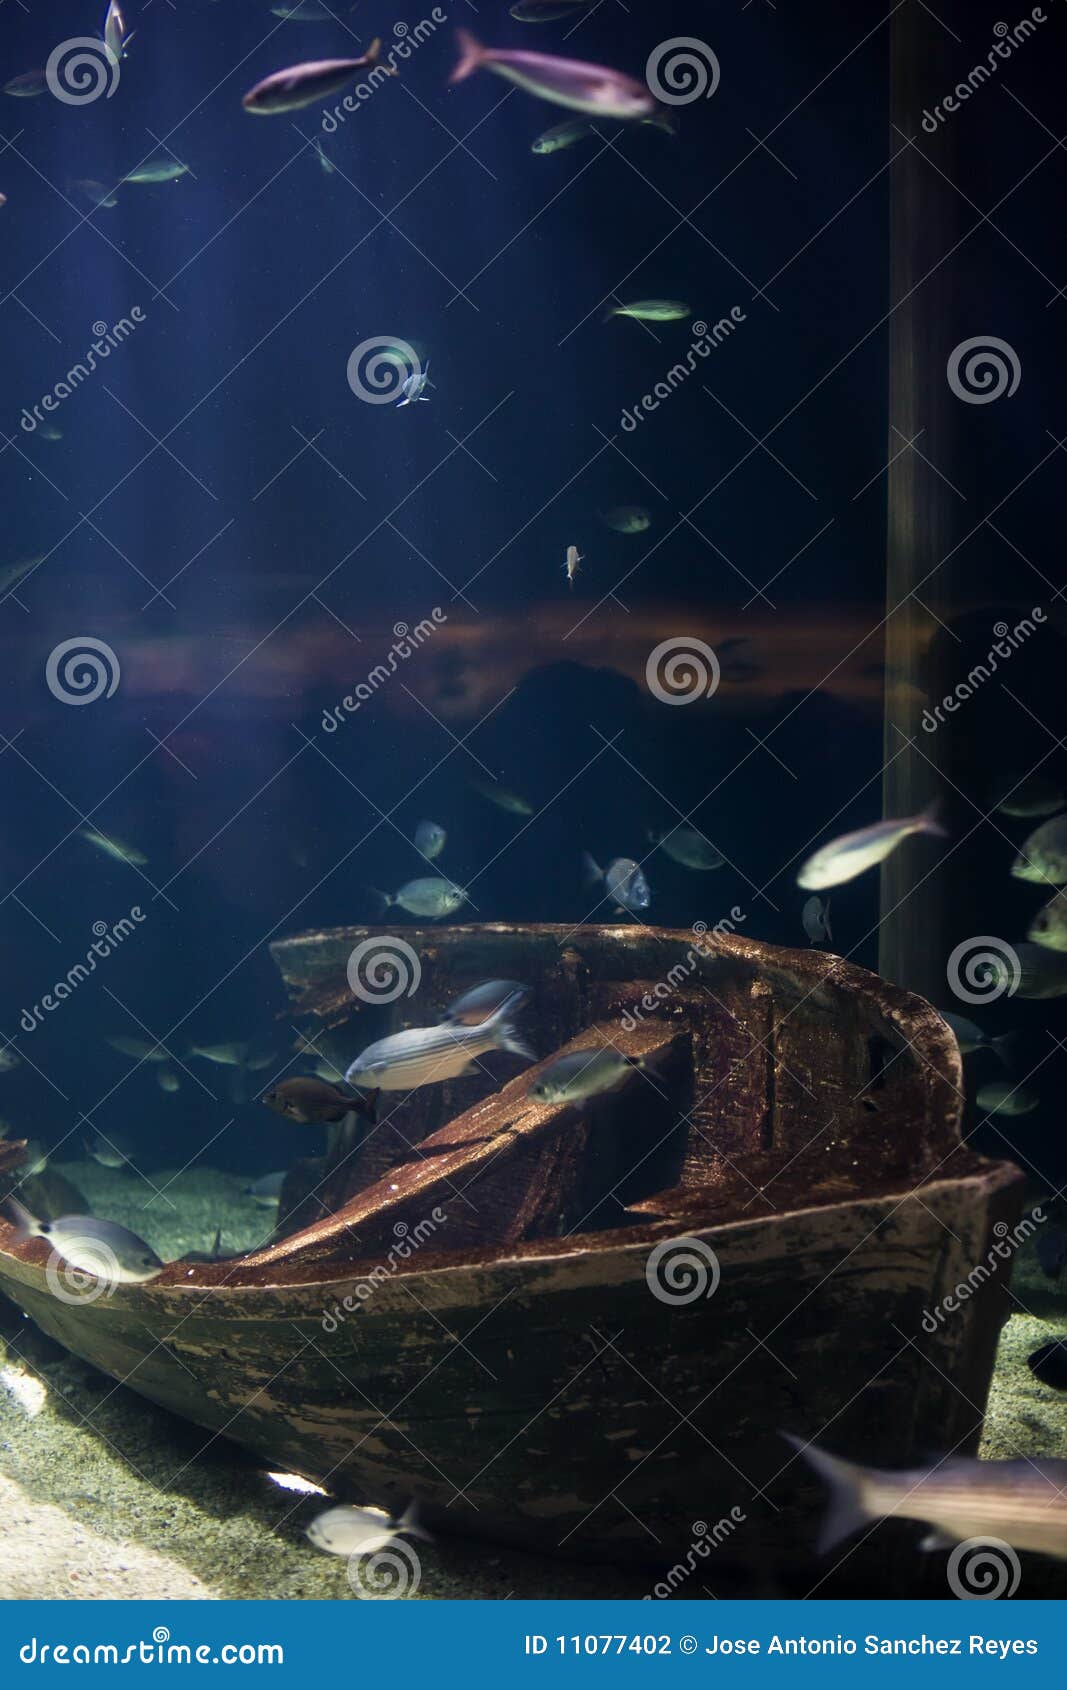 underwater diorama